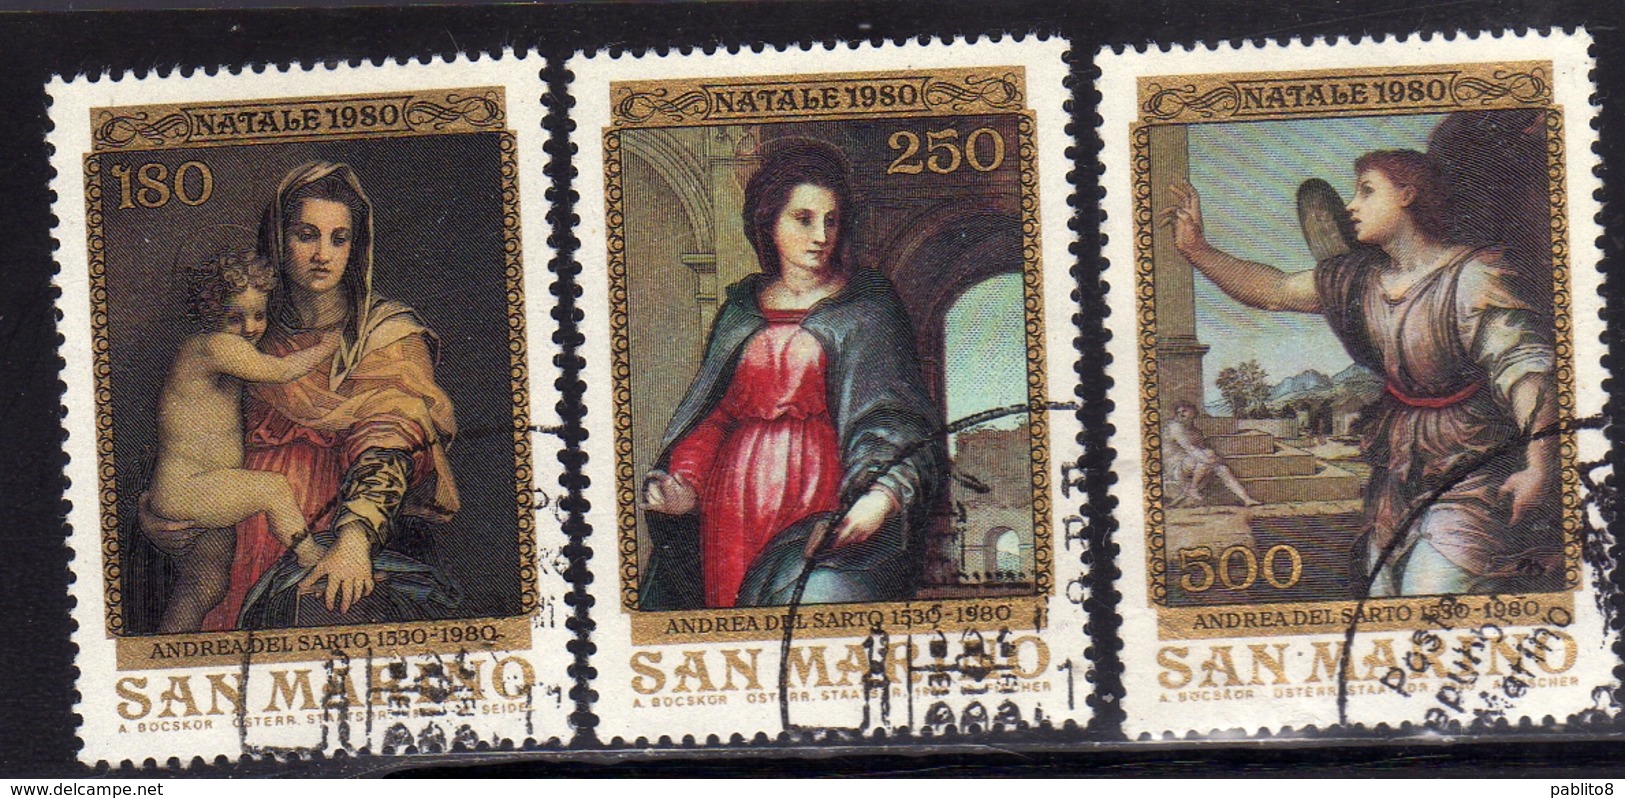 REPUBBLICA DI SAN MARINO 1980 NATALE CHRISTMAS NOEL WEIHNACHTEN NAVIDAD SERIE COMPLETA COMPLETE SET USATA USED OBLITERE' - Used Stamps